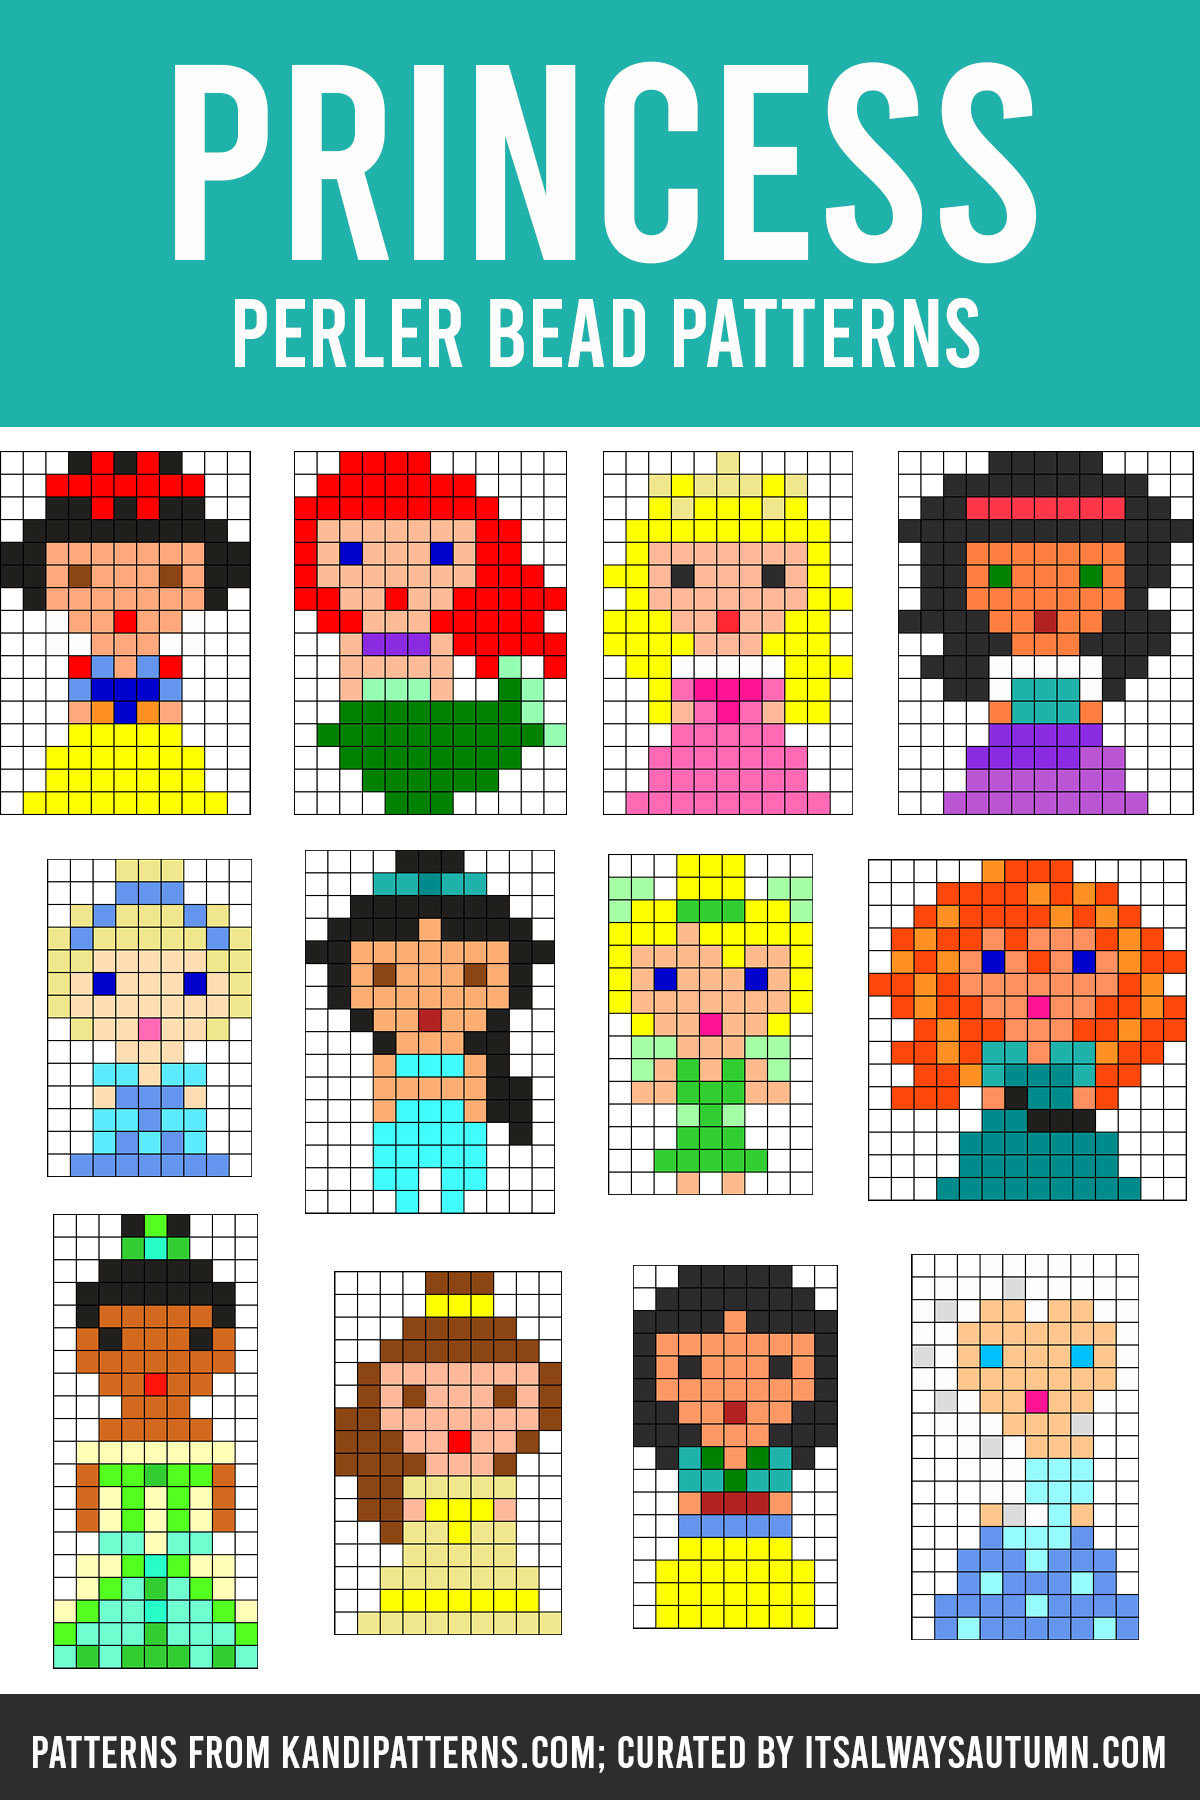 Perler Bead Designs, Patterns and Ideas